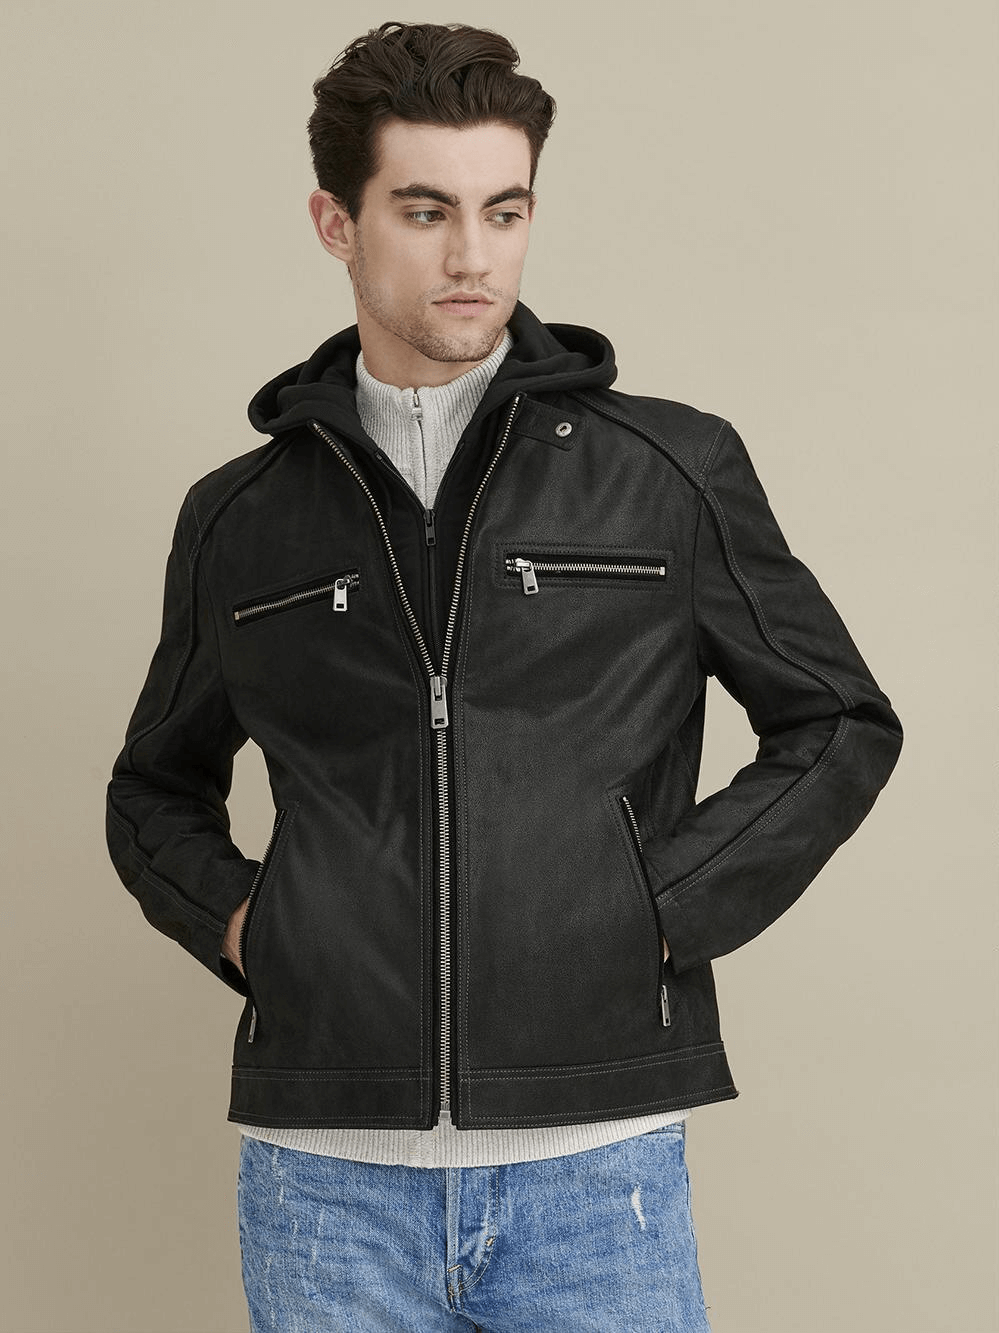 Detachable Hooded Leather Jacket